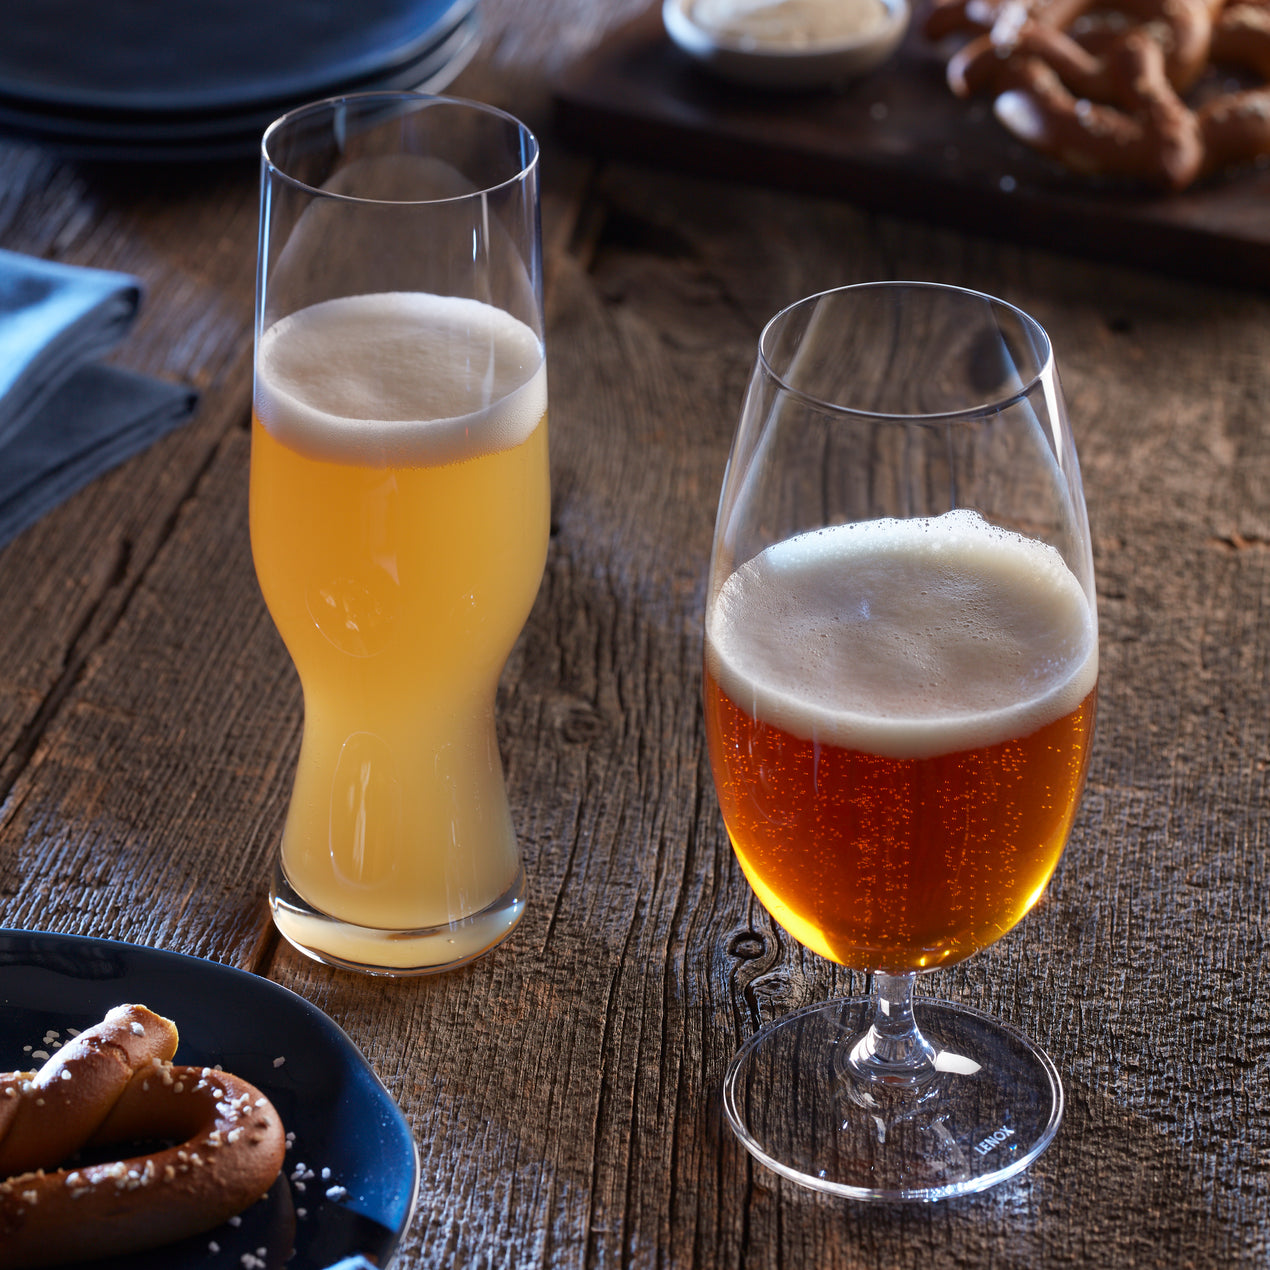 Tuscany Classics Assorted Beer Glass, Set of 4 – Lenox Corporation